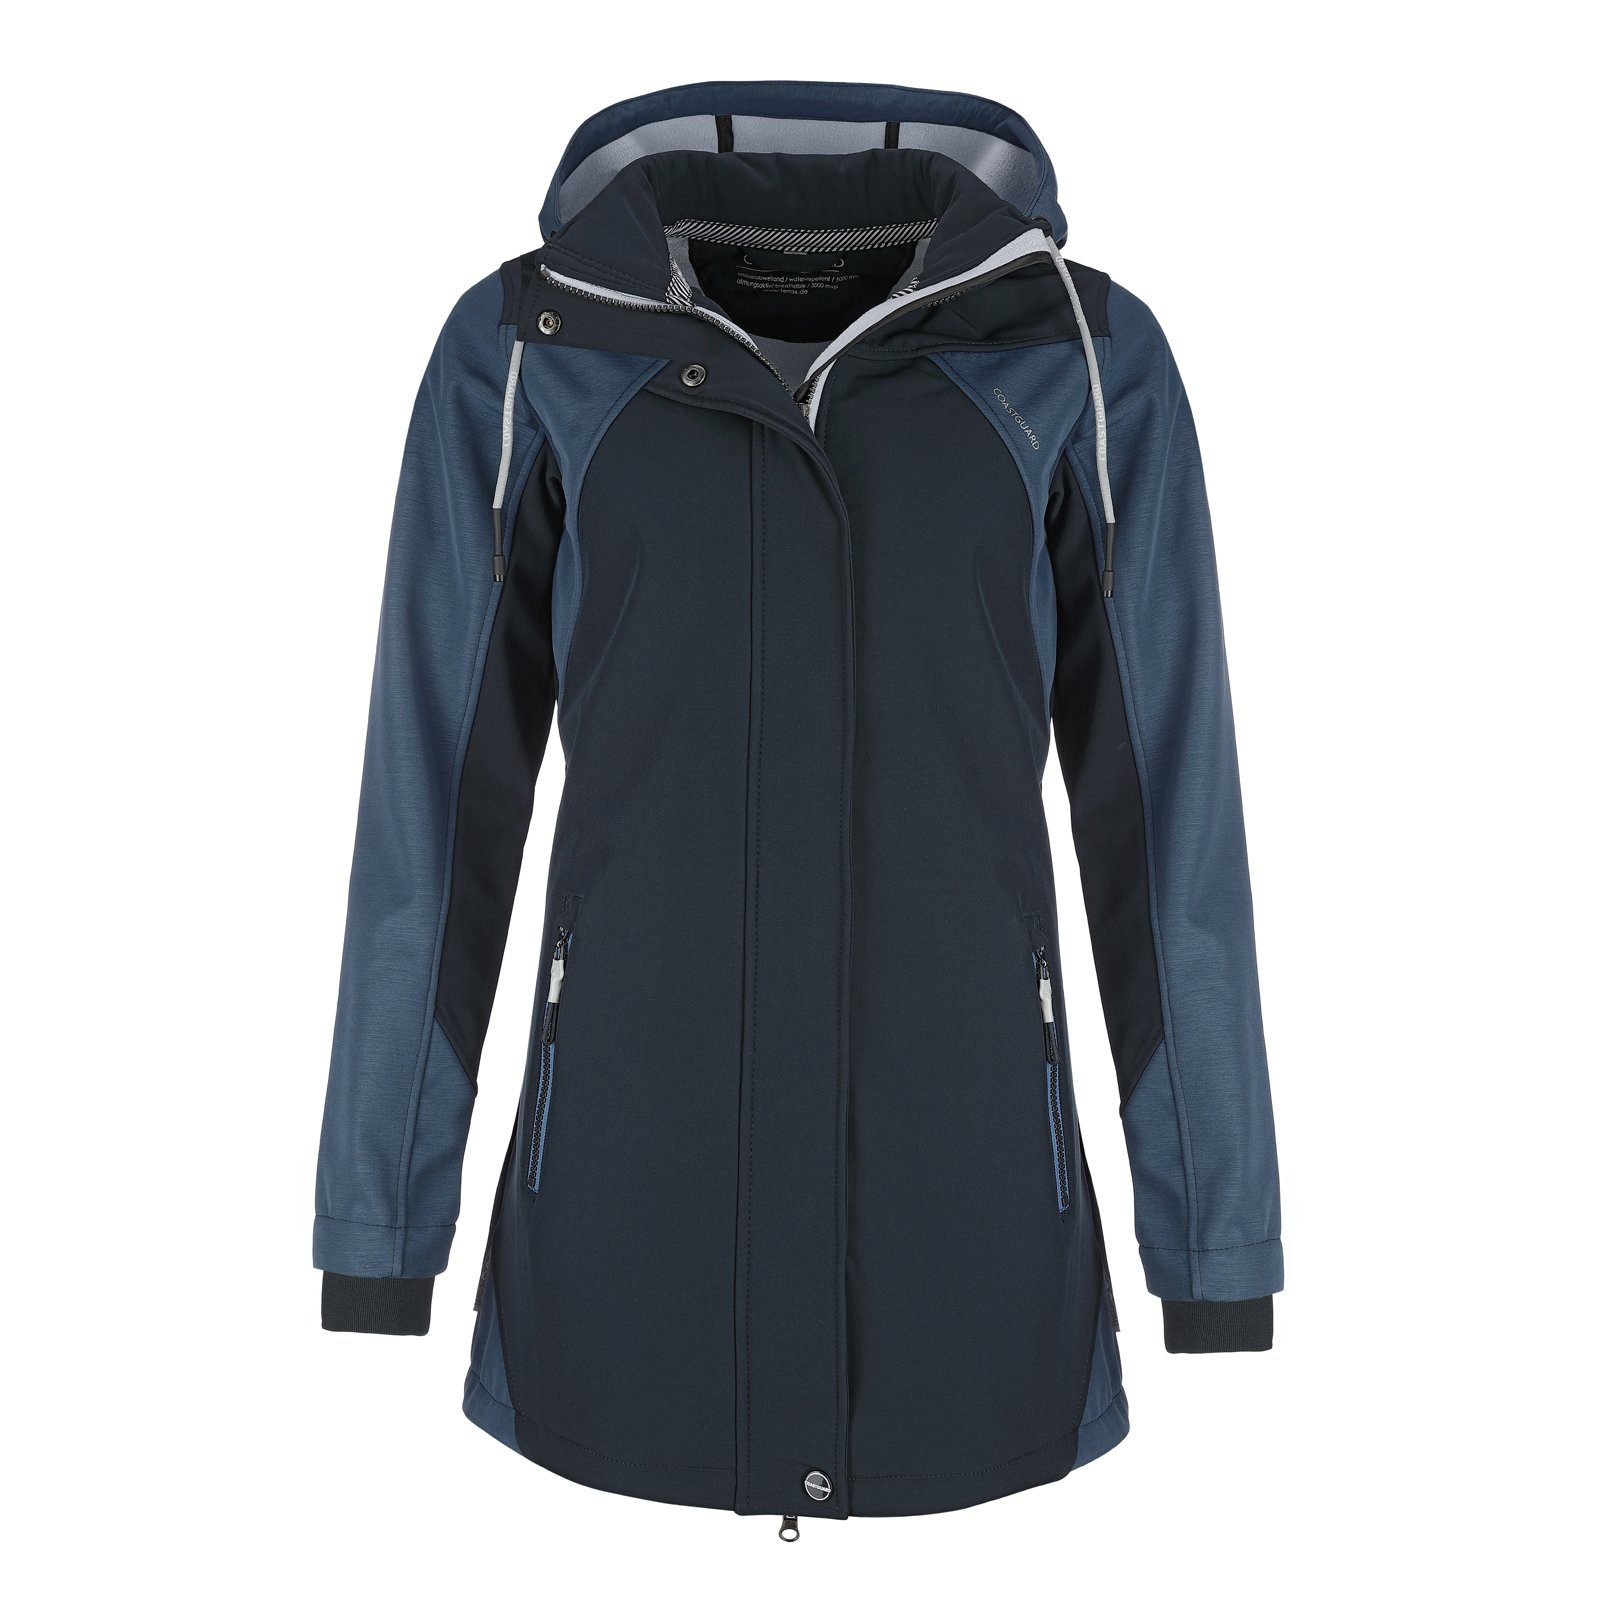 Coastguard Softshelljacke Damen Jacke zweifarbig – Outdoor-Jacke abnehmbarer Kapuze atmungsaktiv dunkelblau/hellblau